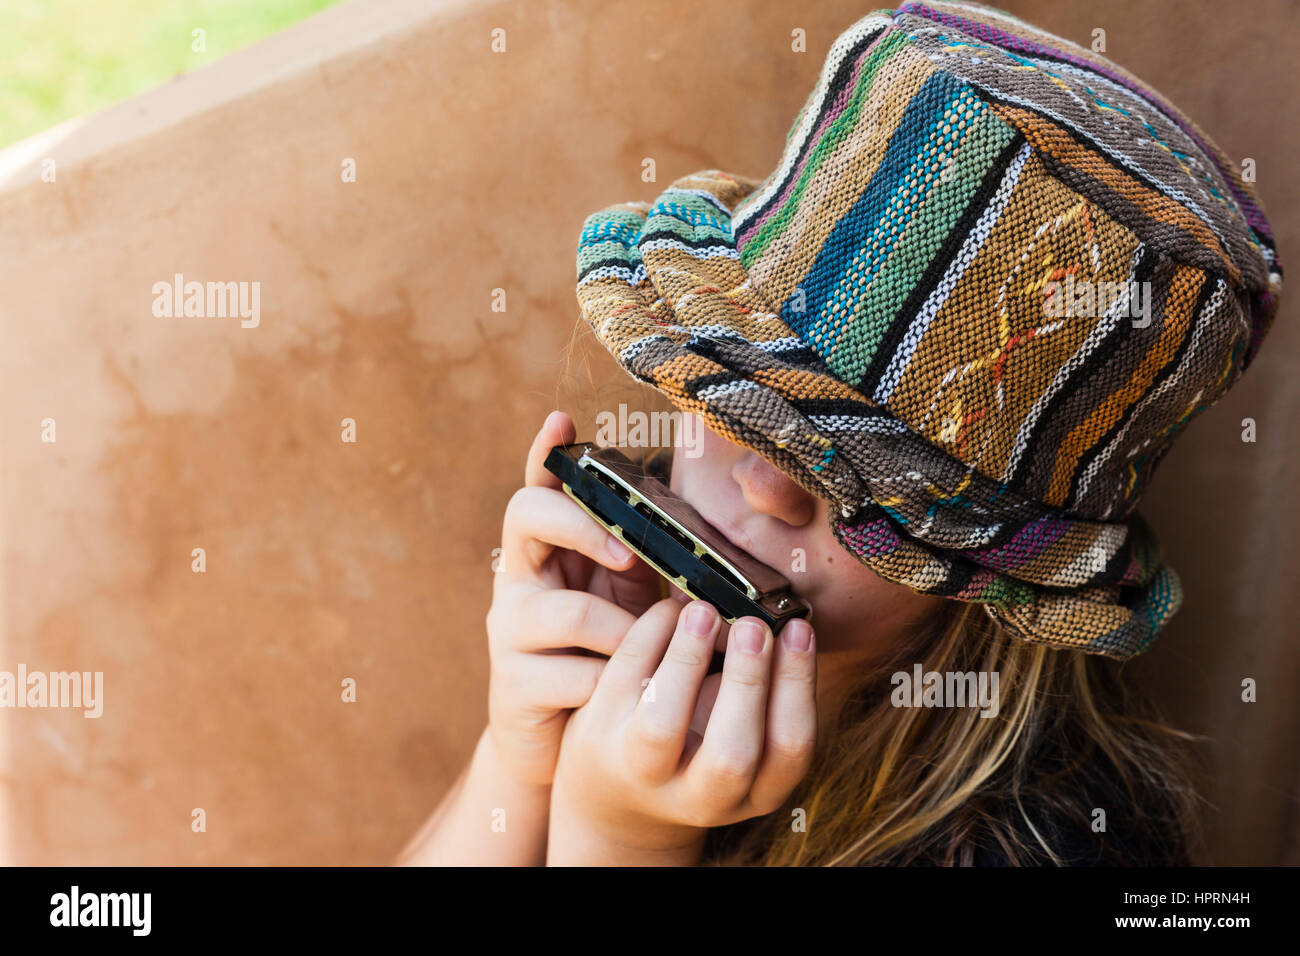 Girl wearing hat plays closeup unidentified playing mouth organ. Stock Photo